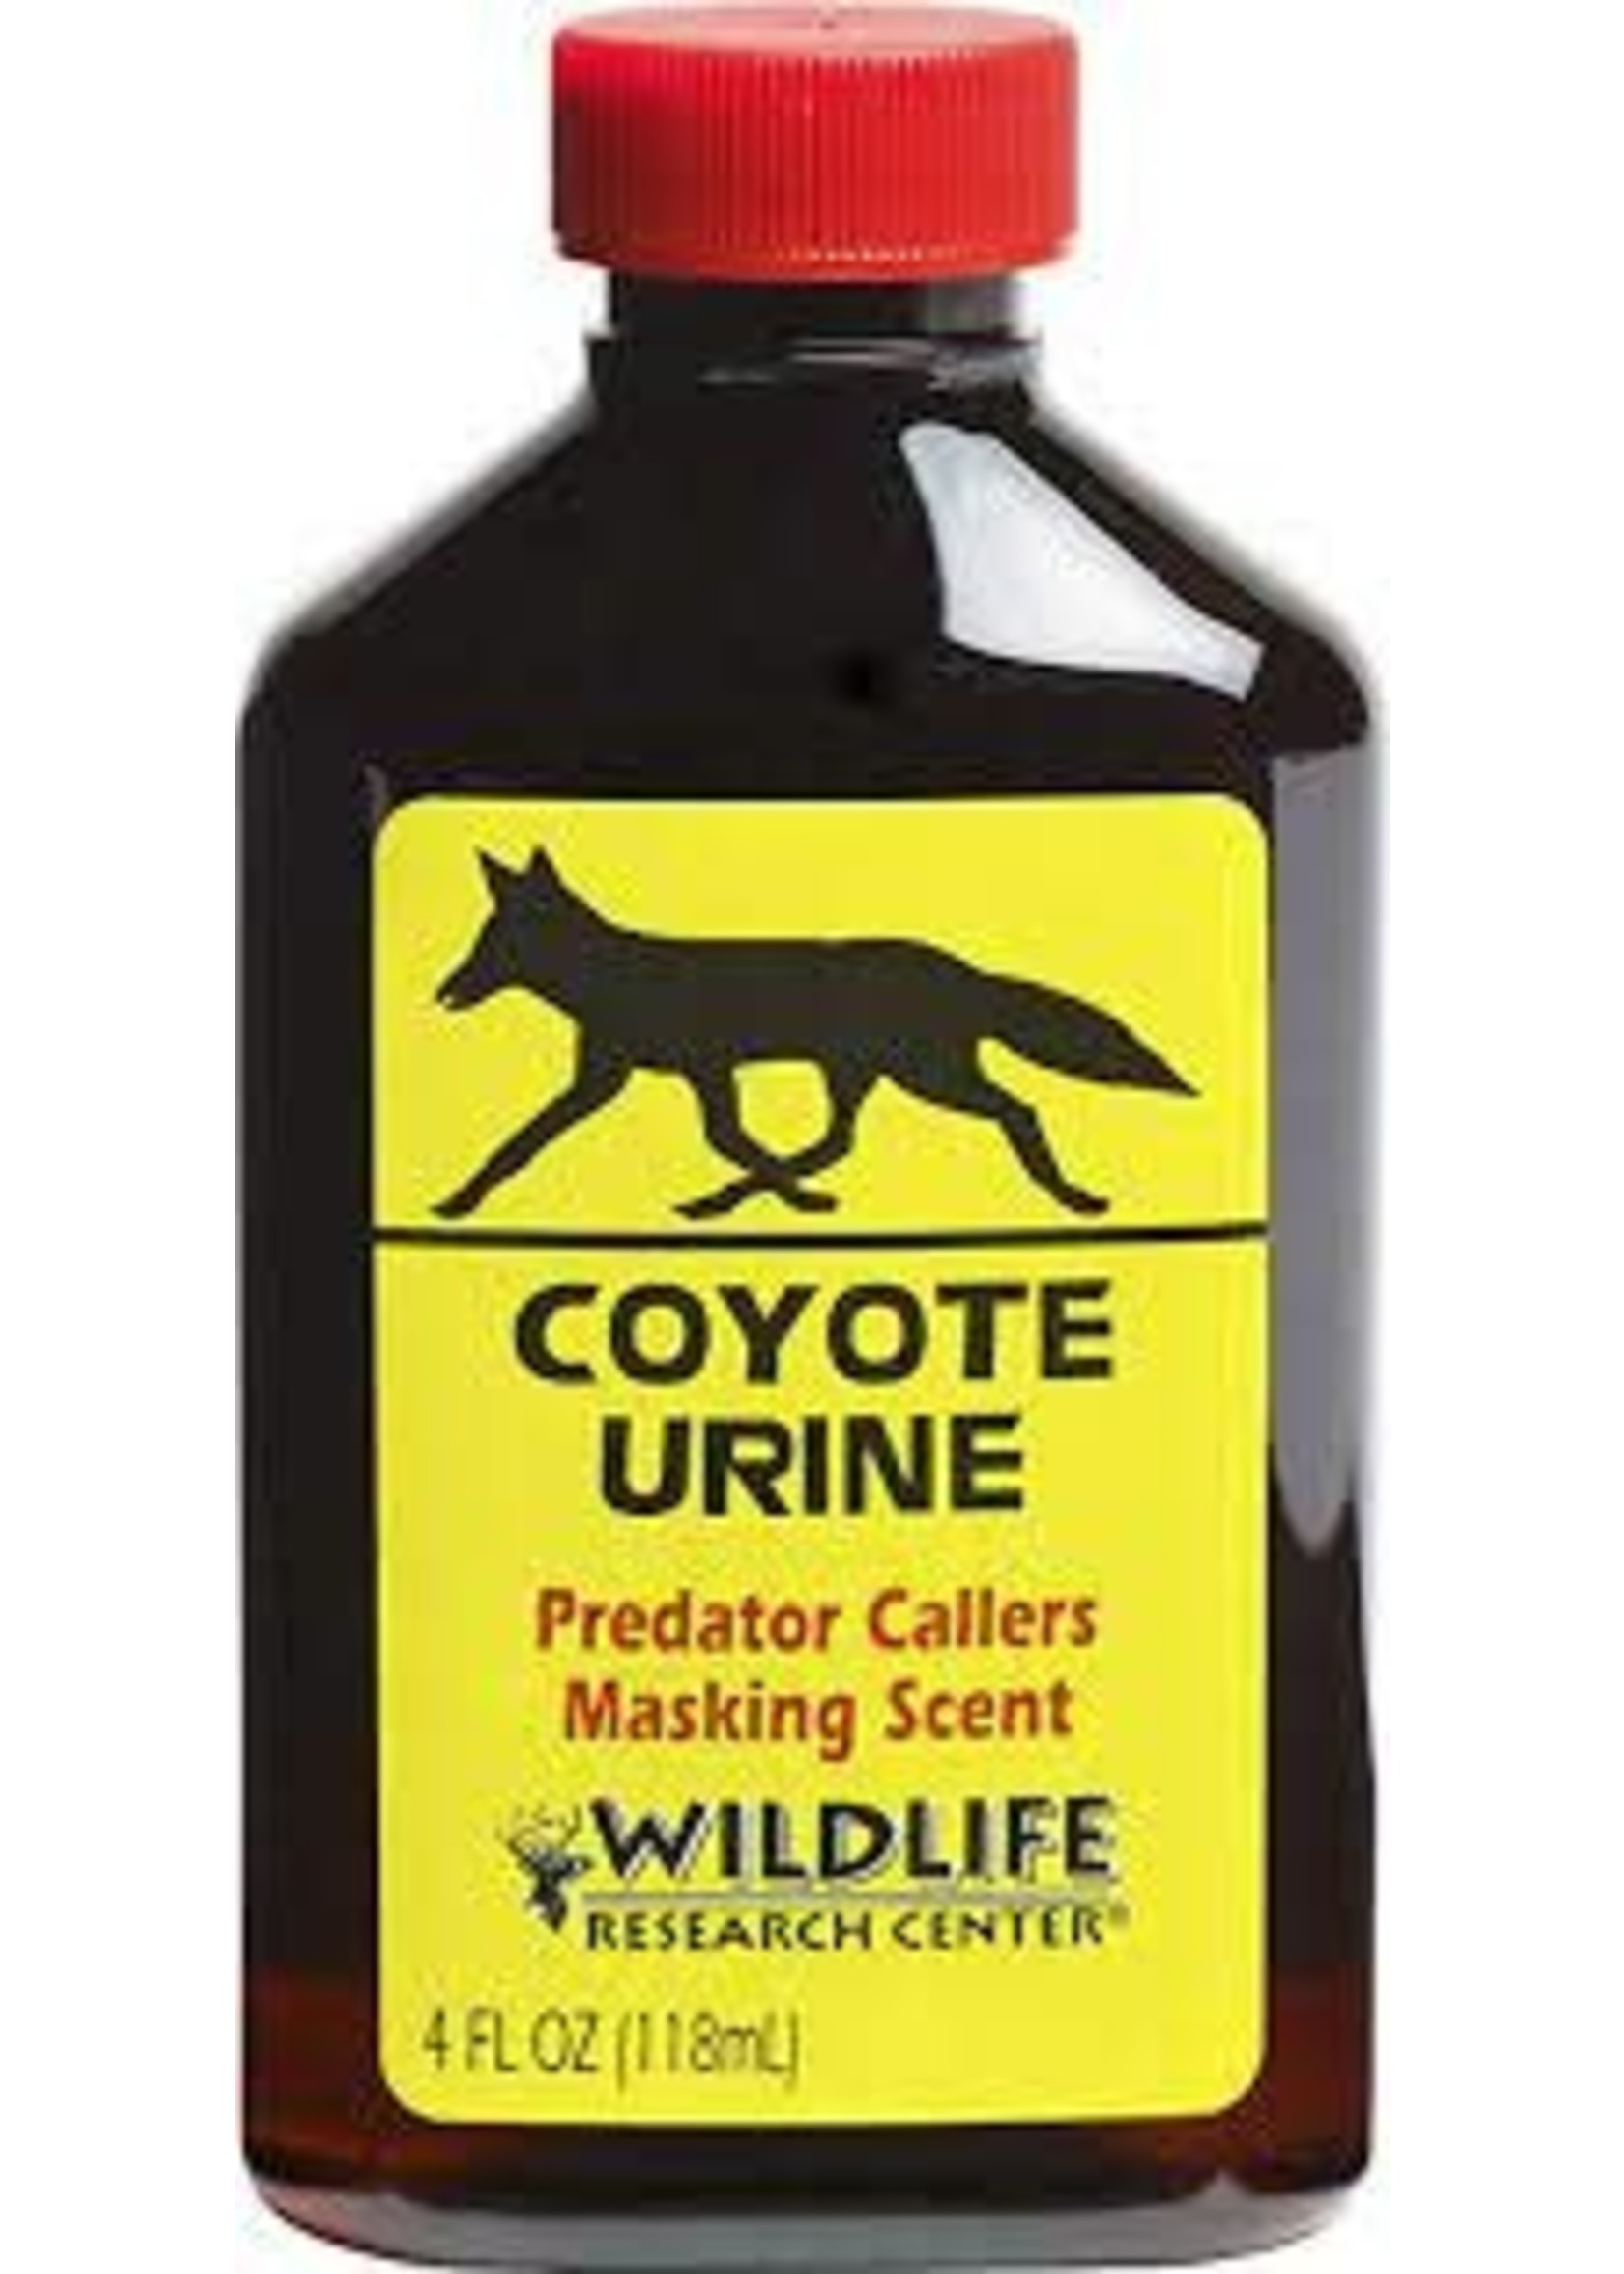 Wildlife Research Center coyote urine predator callers masking scent